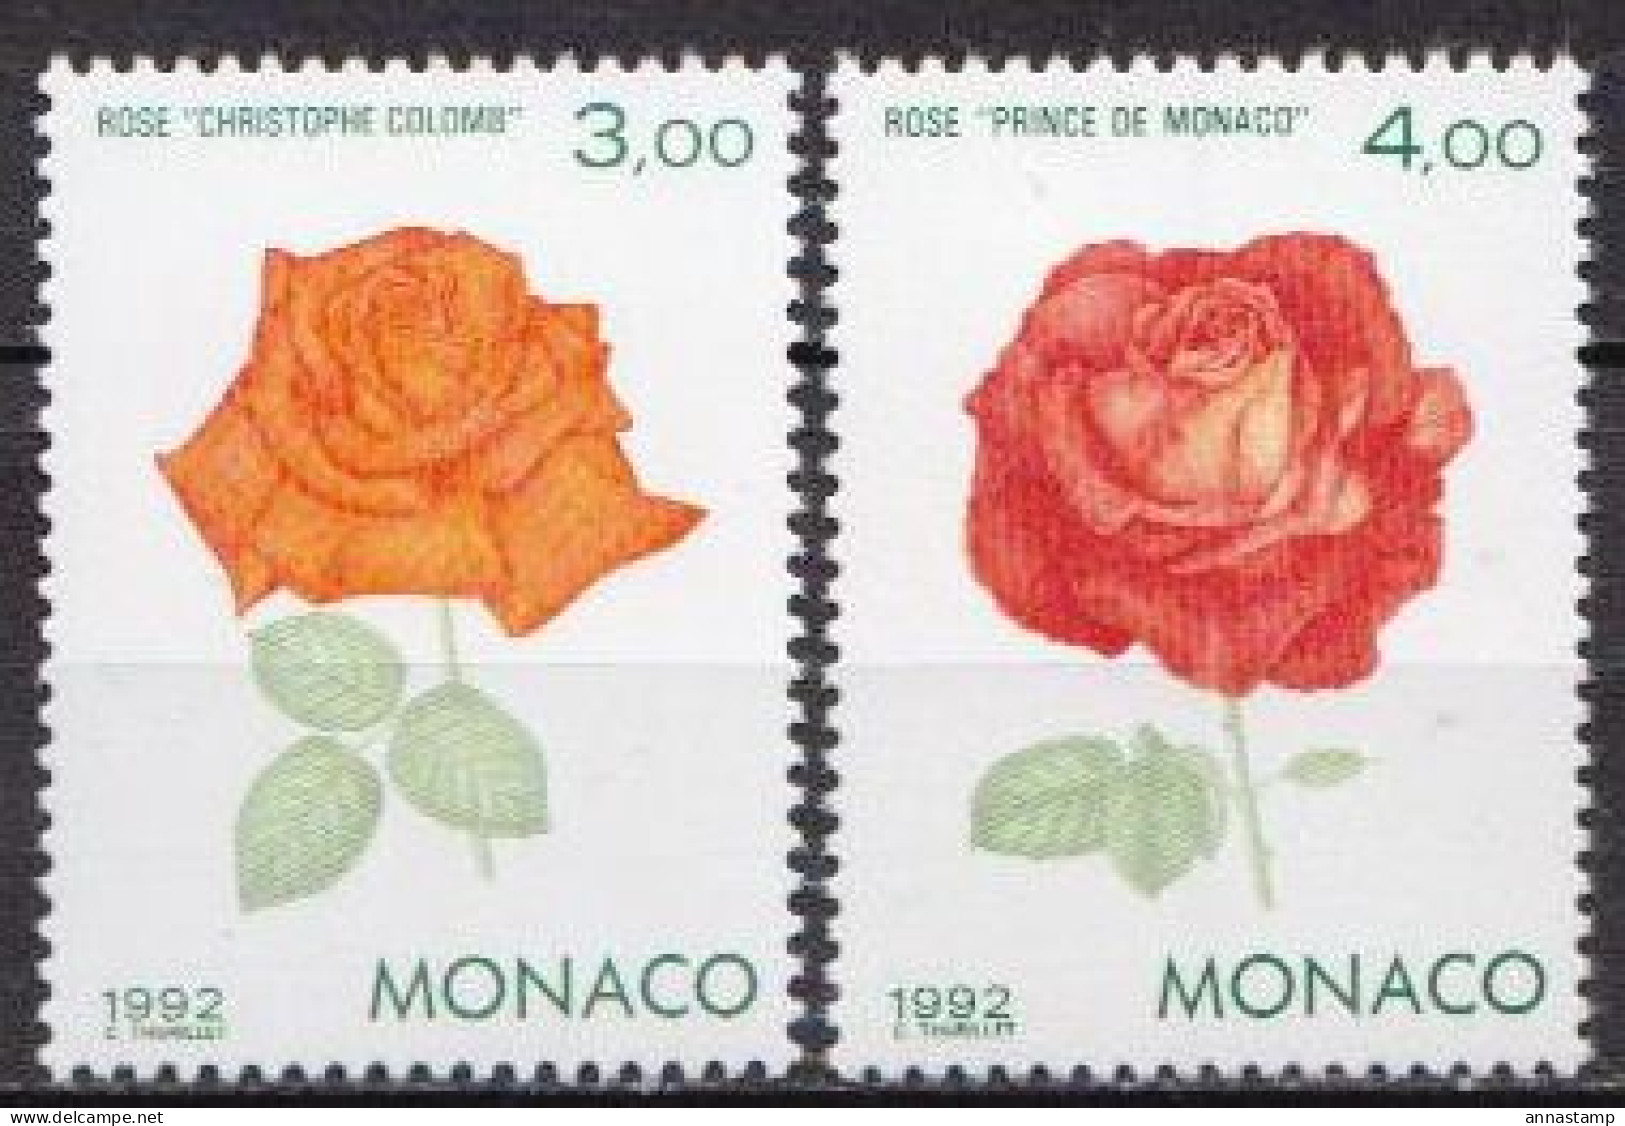 Monaco MNH Set - Rose